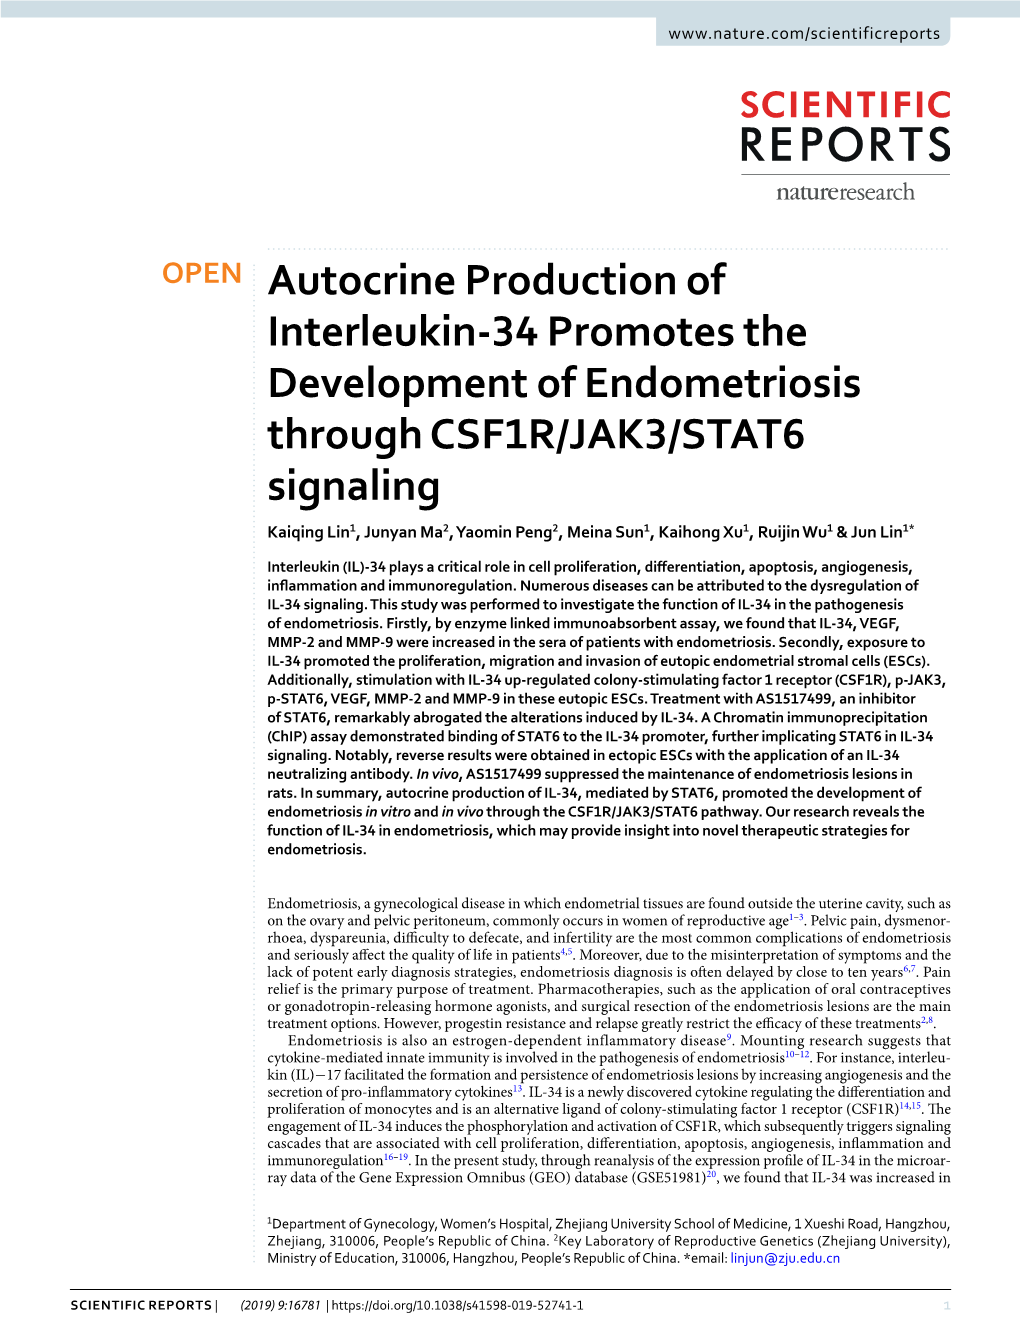 Autocrine Production of Interleukin-34 Promotes the Development Of